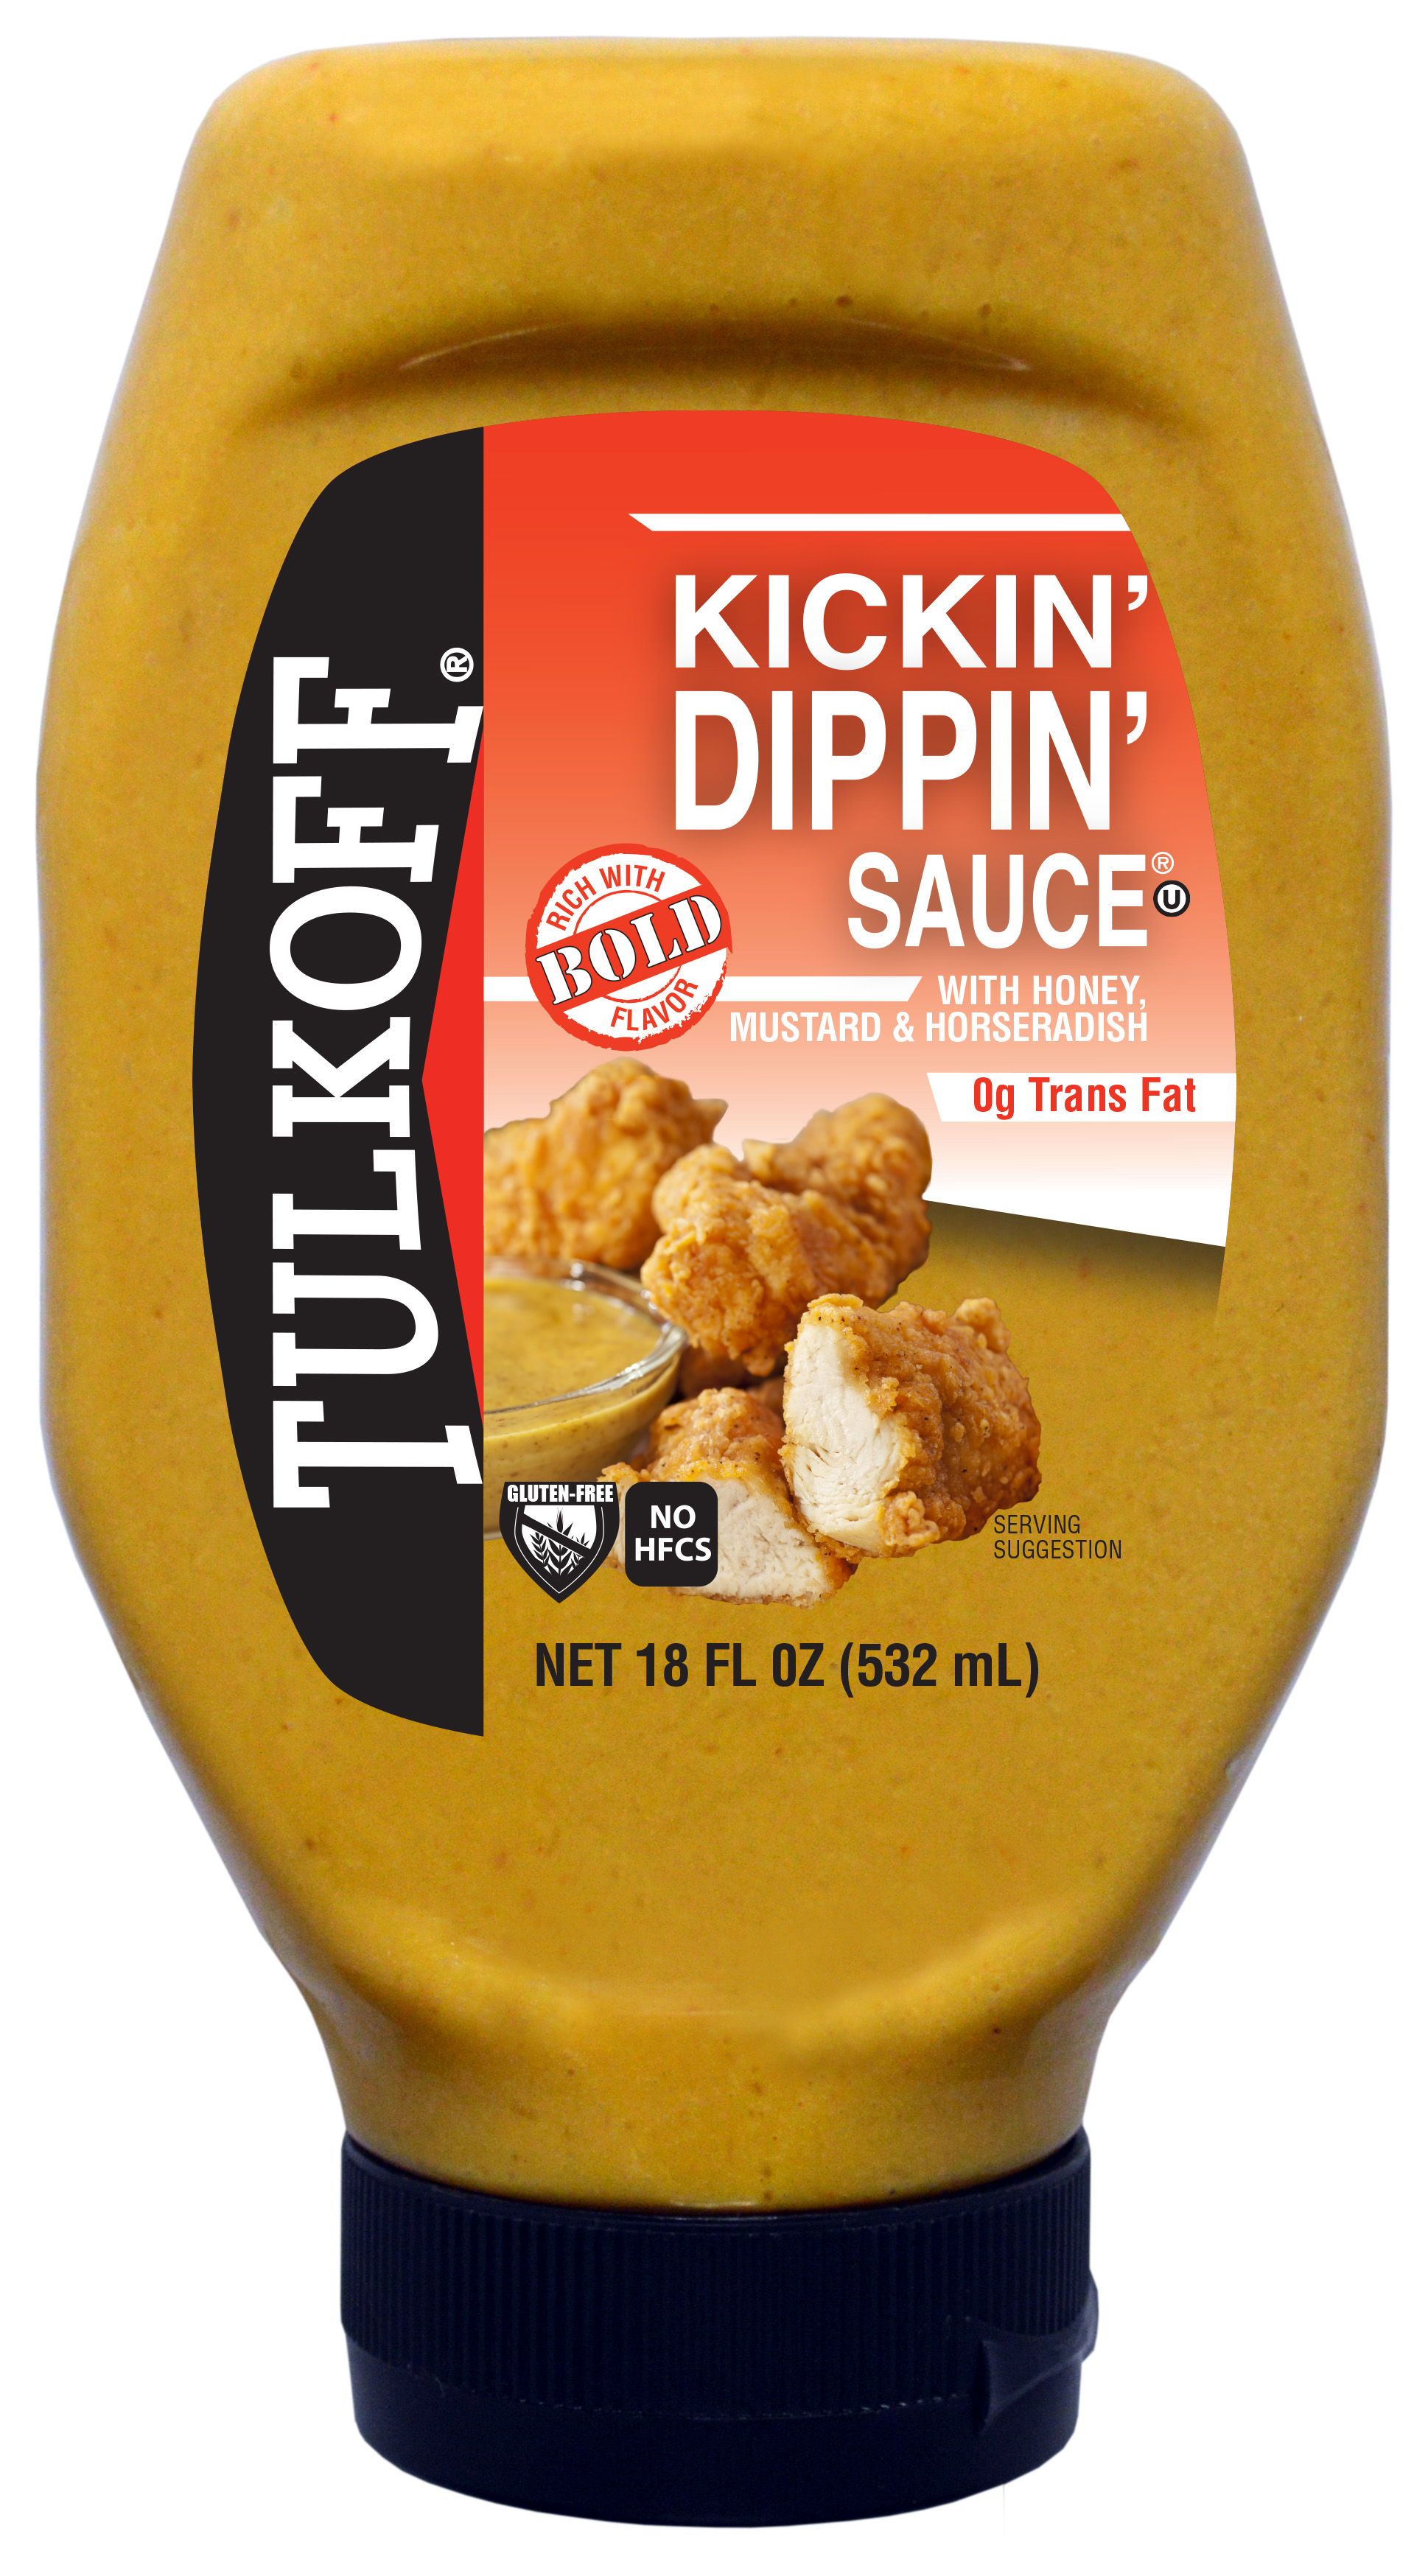 Kickin Dippin Sauce from Tulkoff